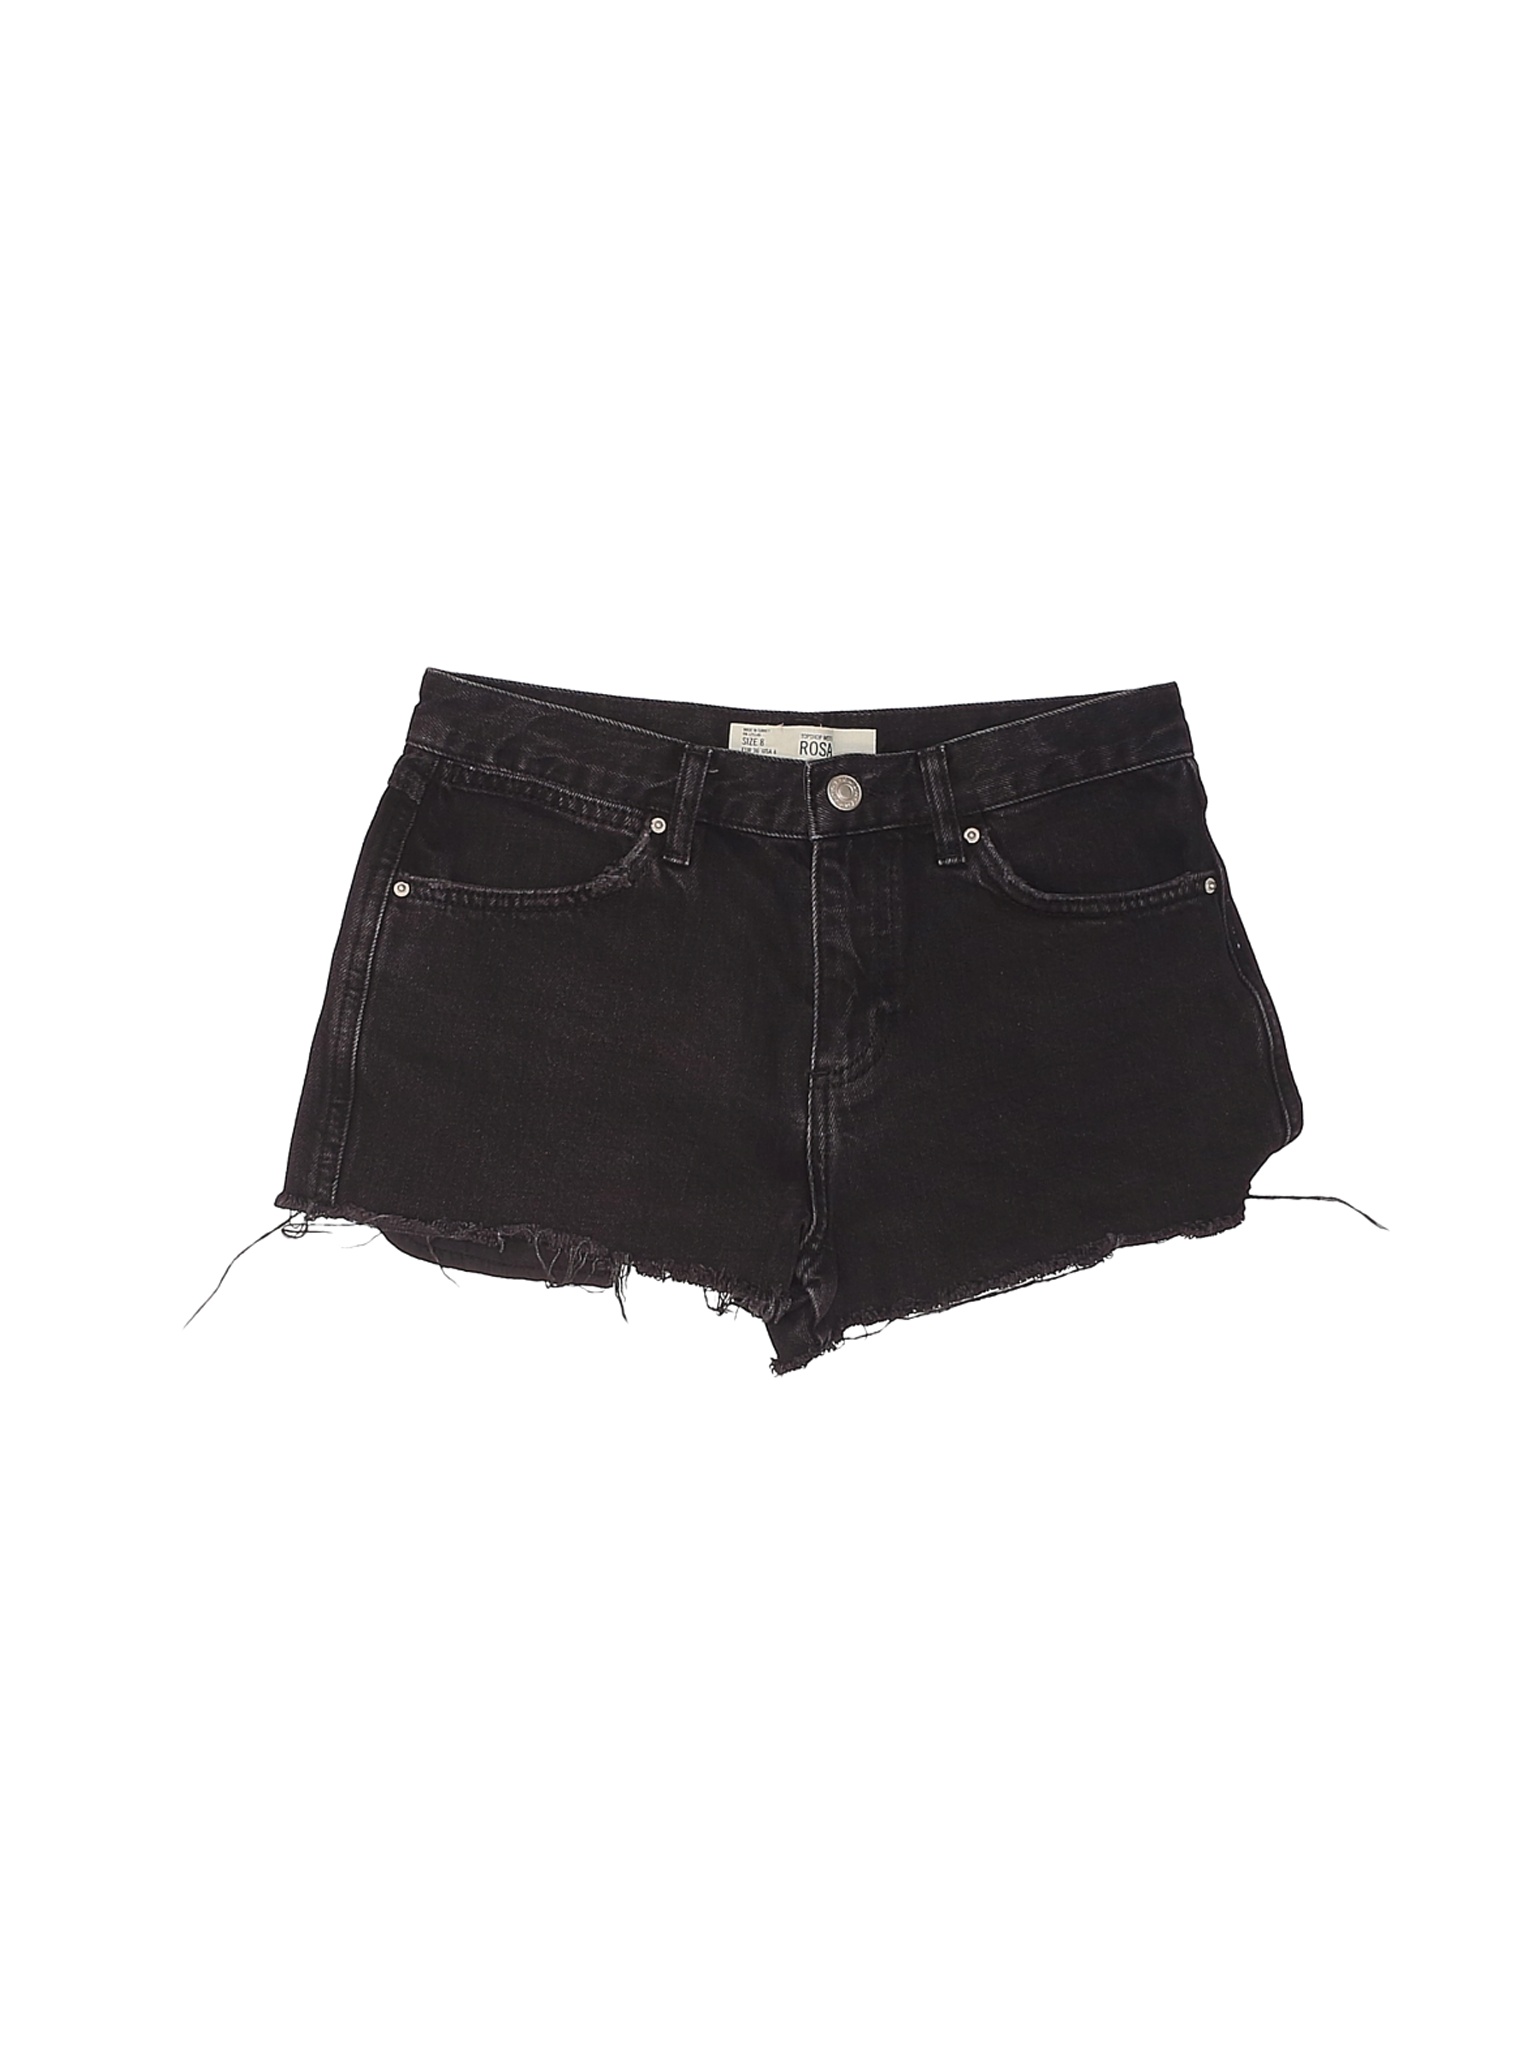 Topshop Women Black Denim Shorts 8 | eBay